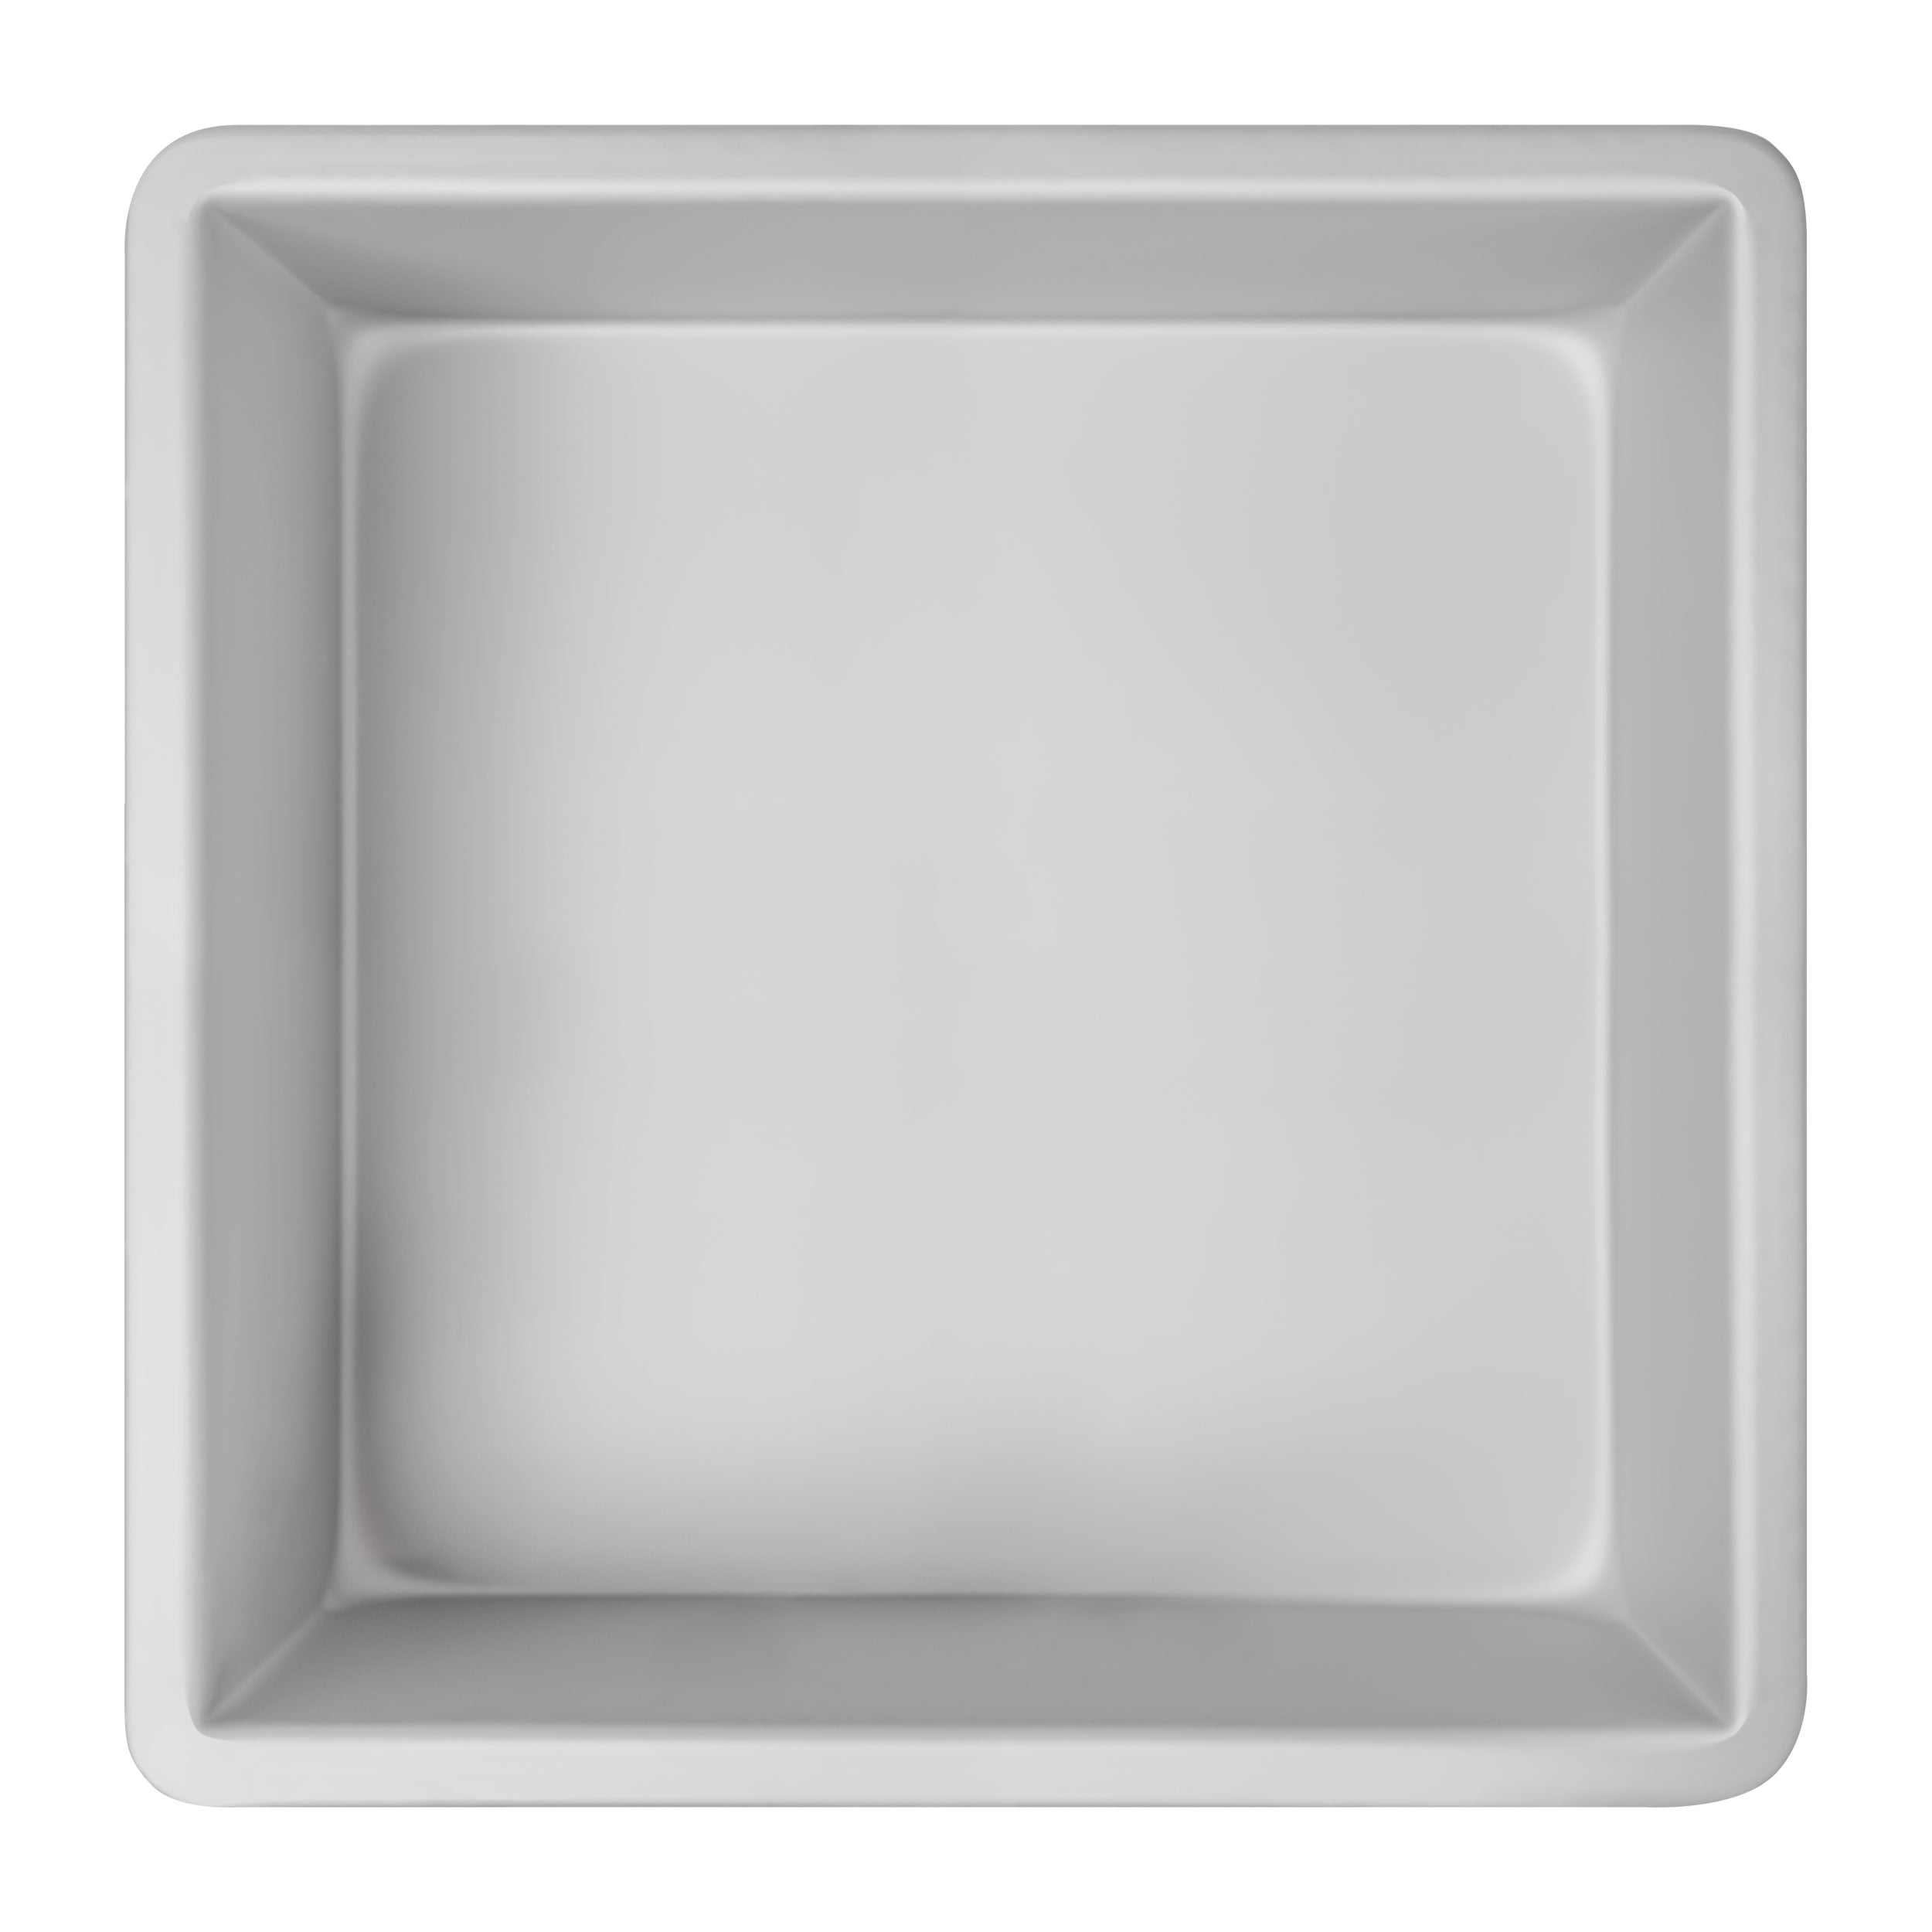 Fat Daddio's Psq-14143 Anodized Aluminum Square Cake Pan, 14 X 14 X 3,  Silver : Target